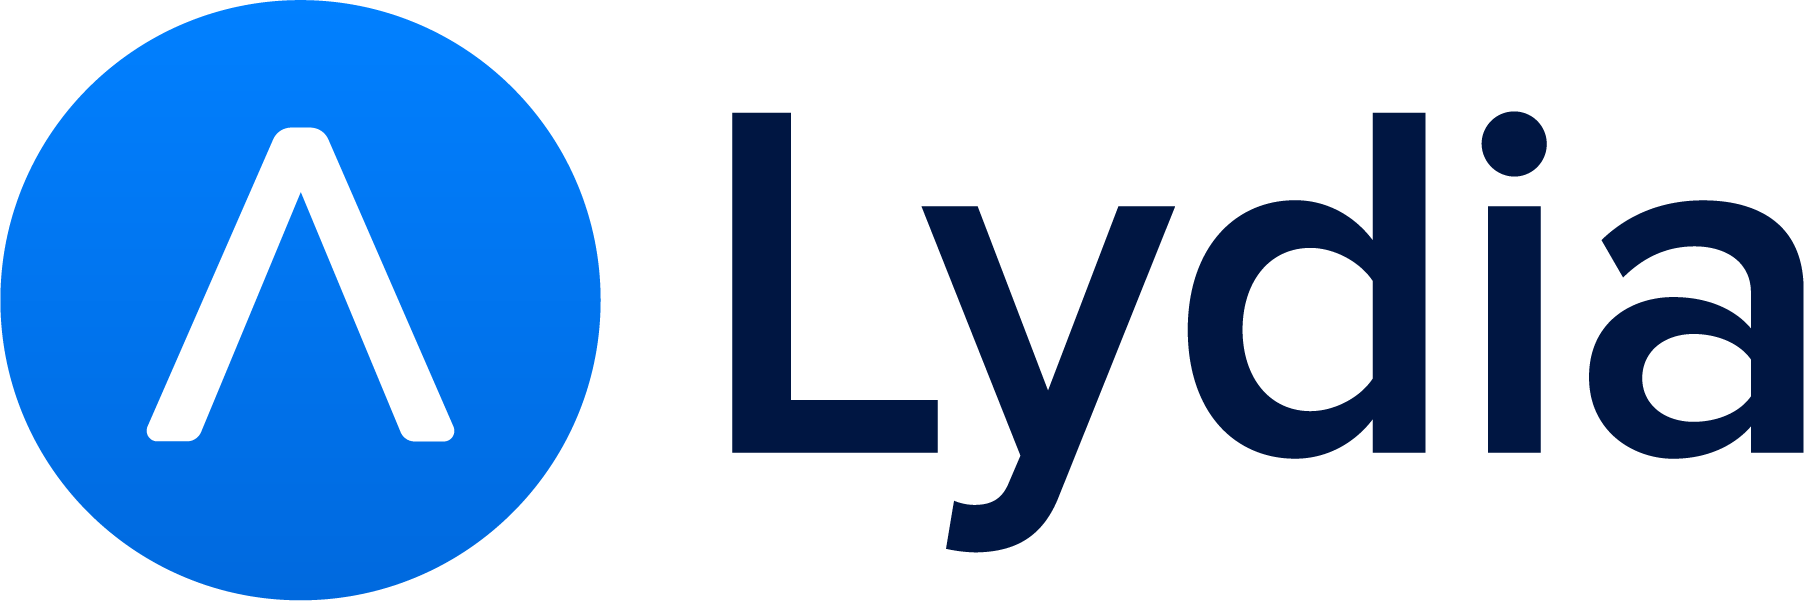 1 logo